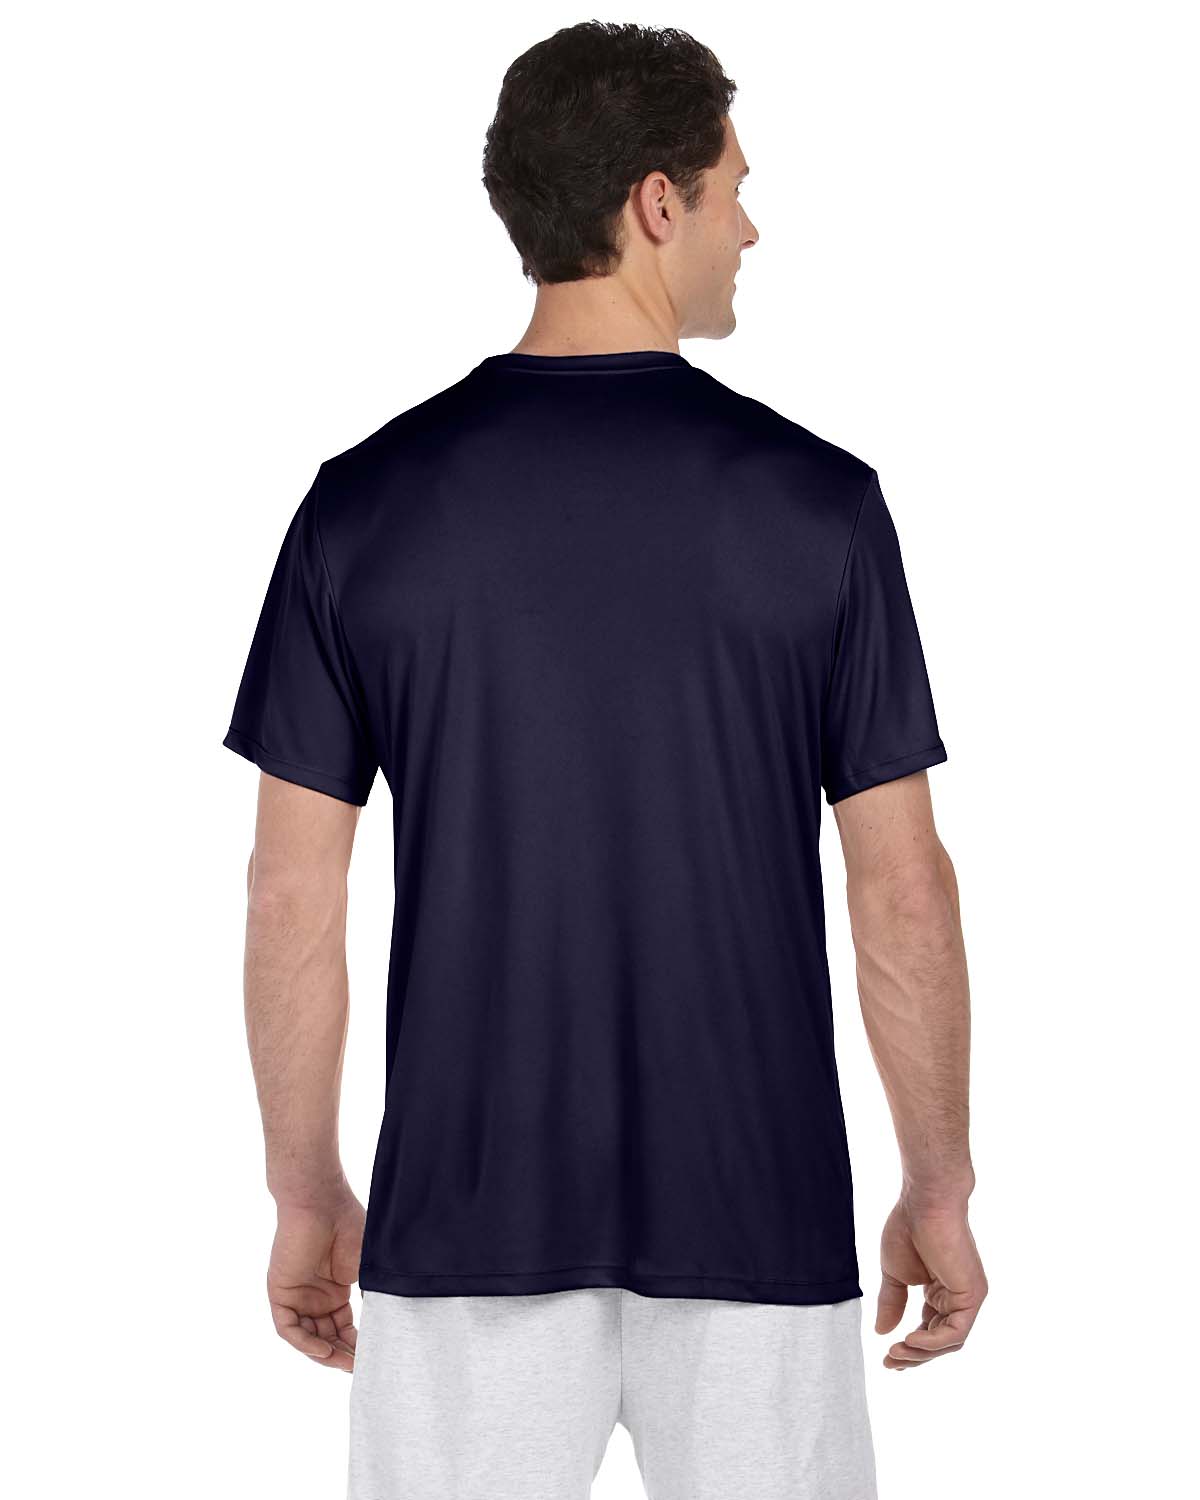 Mens Cool DRI TAGLESS Men's T-Shirt 4820 (2 PACK) - image 3 of 3